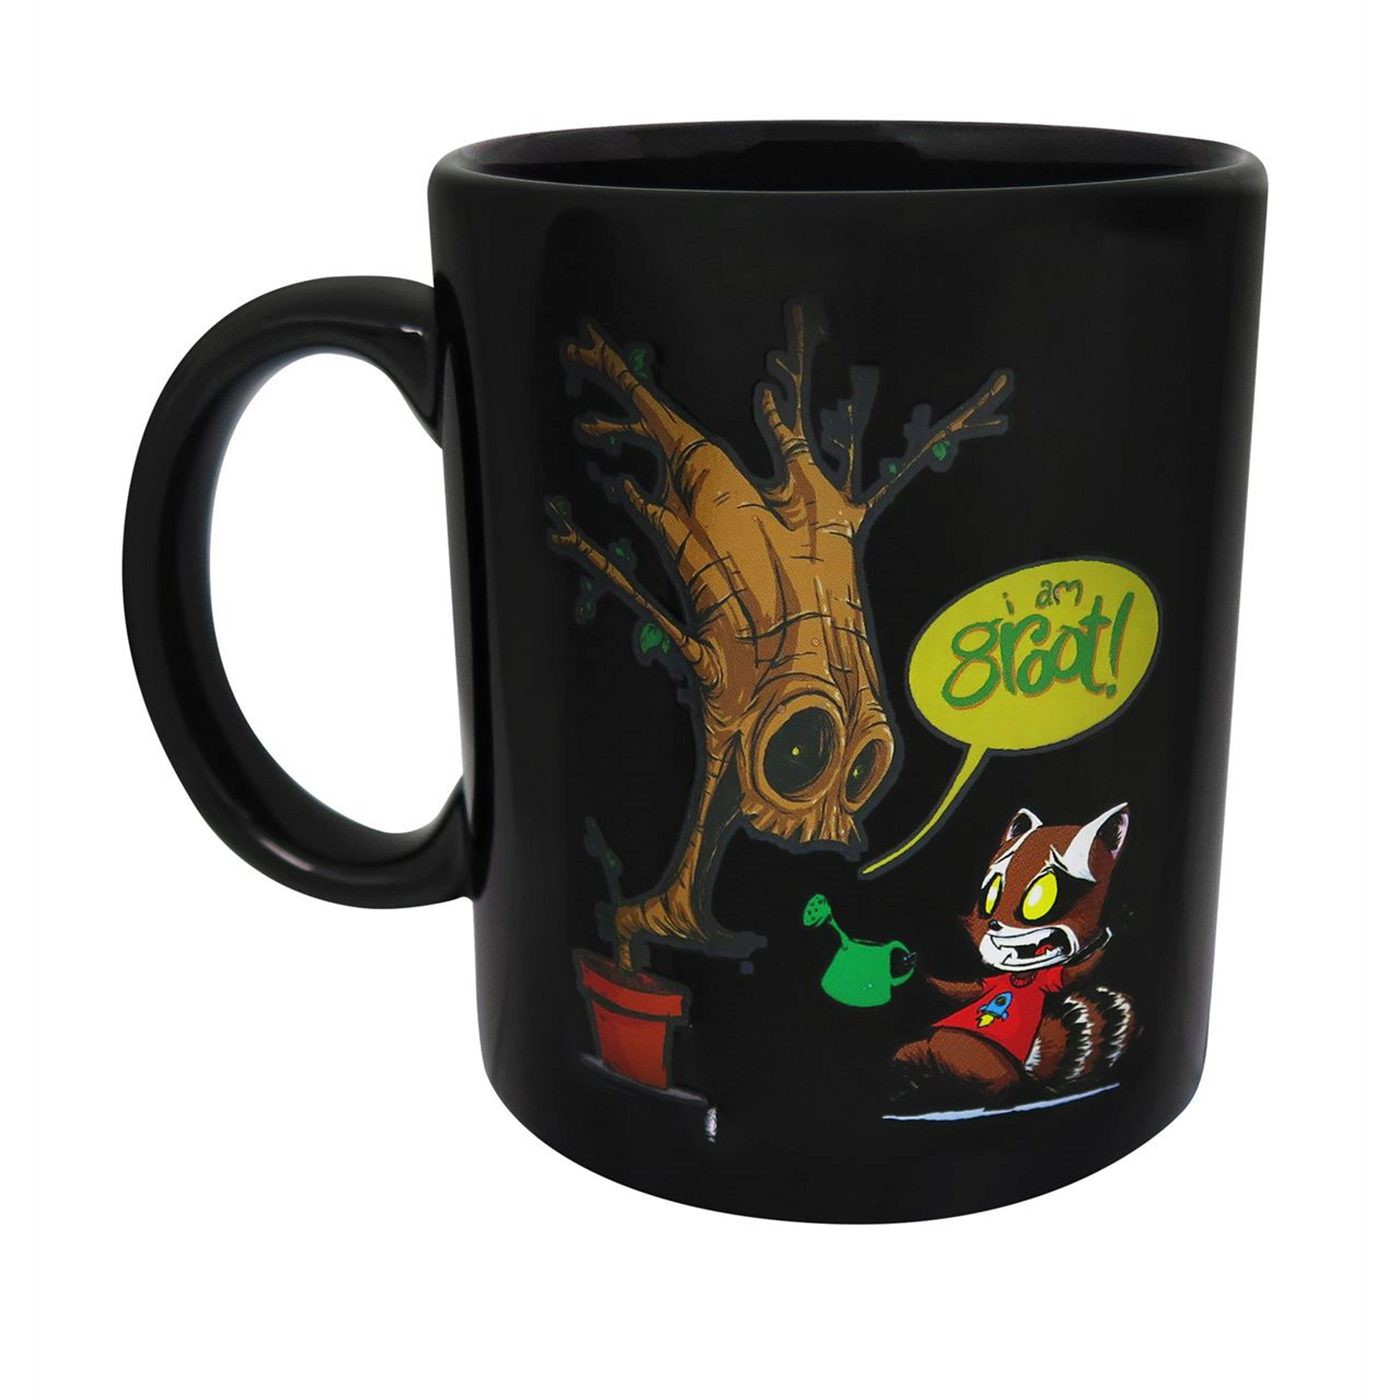 GOTG Rocket Raccoon and Groot Heat Changing Mug